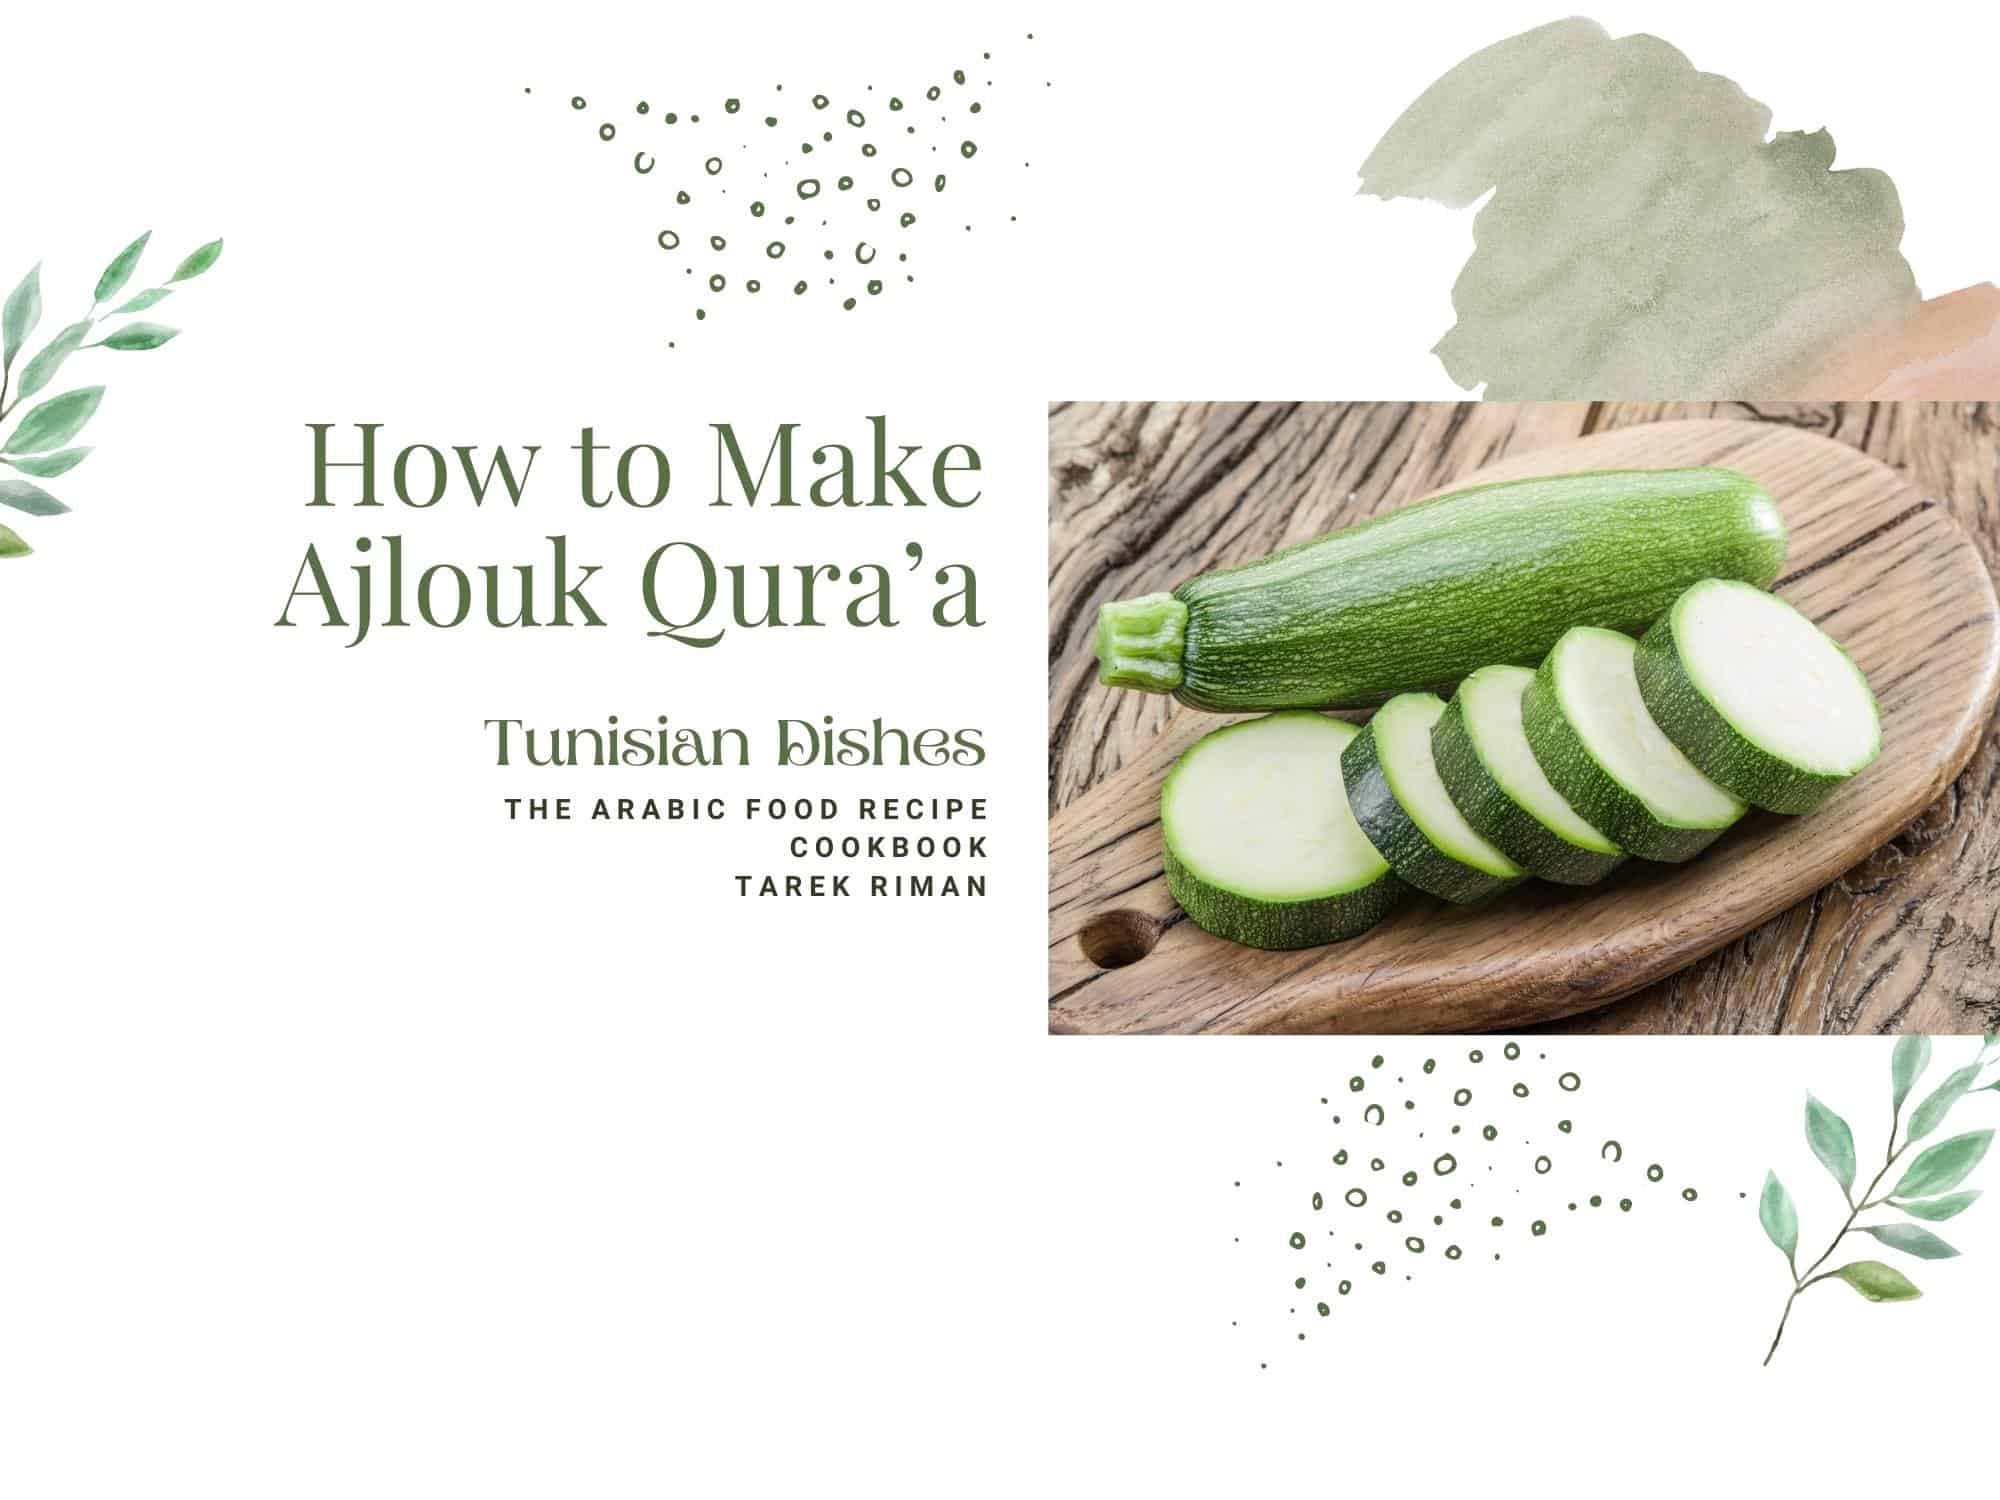 How to Make Ajlouk Qura’a